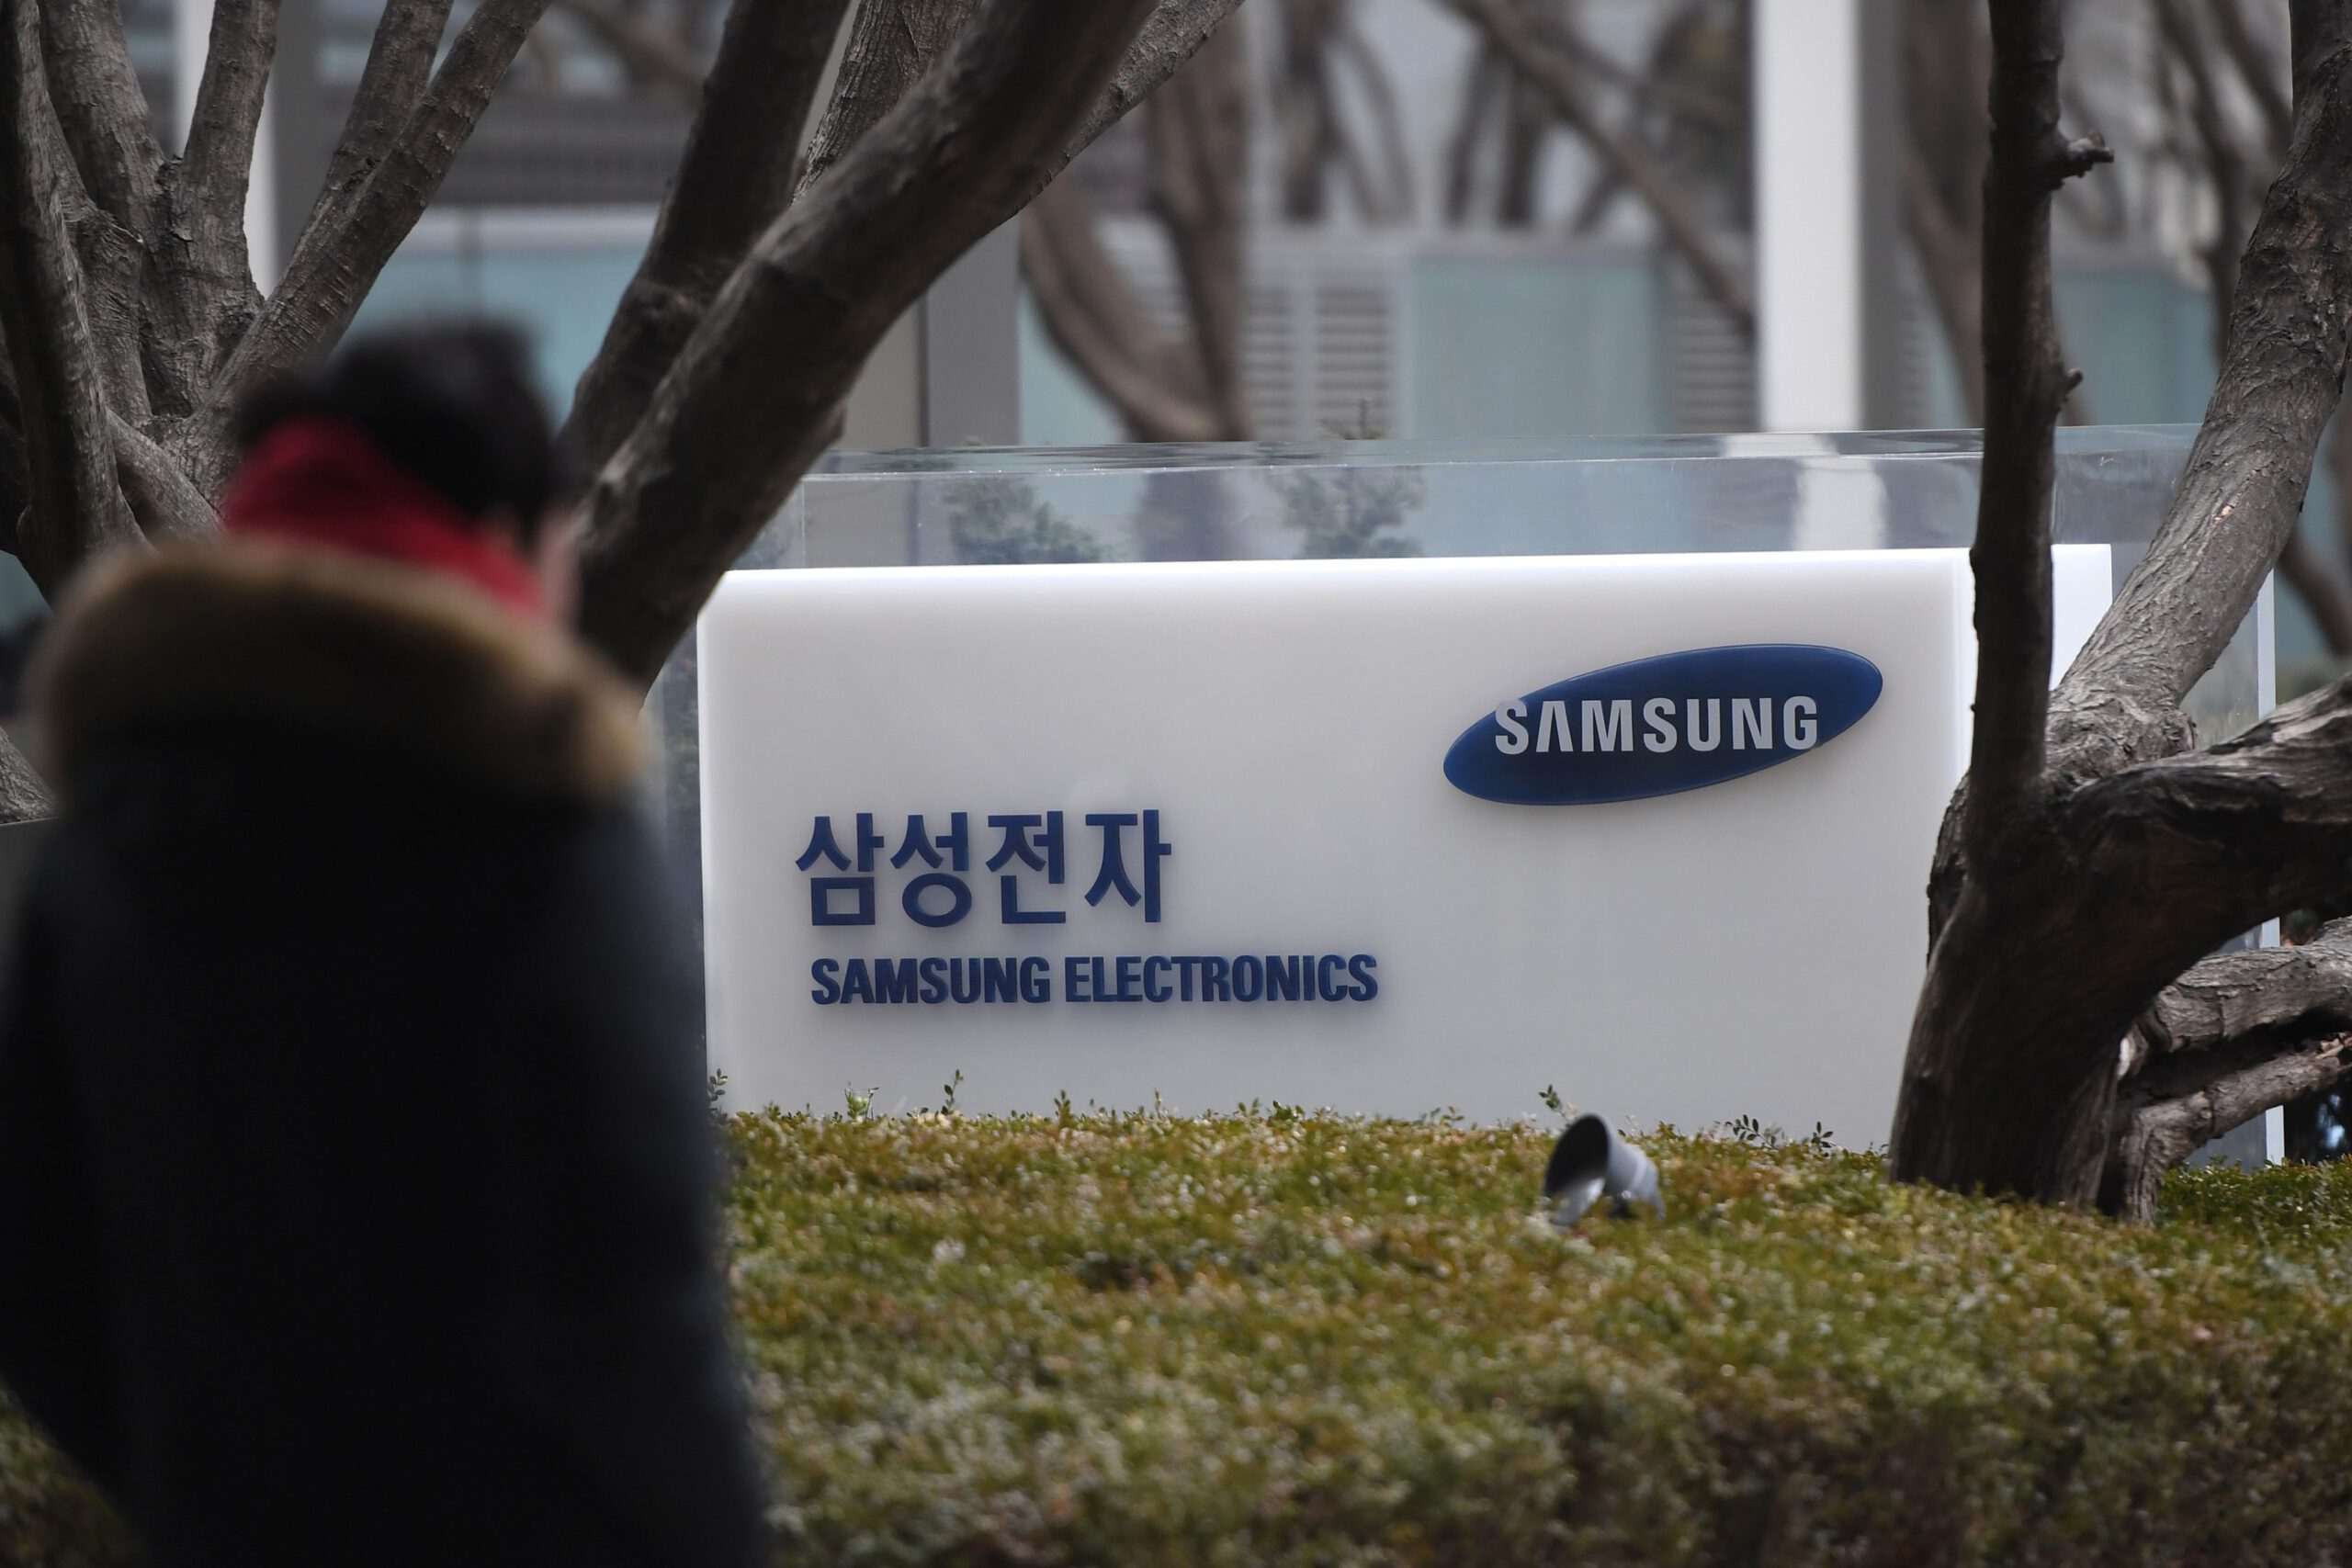 Samsung Q2 guidance: Weak memory demand